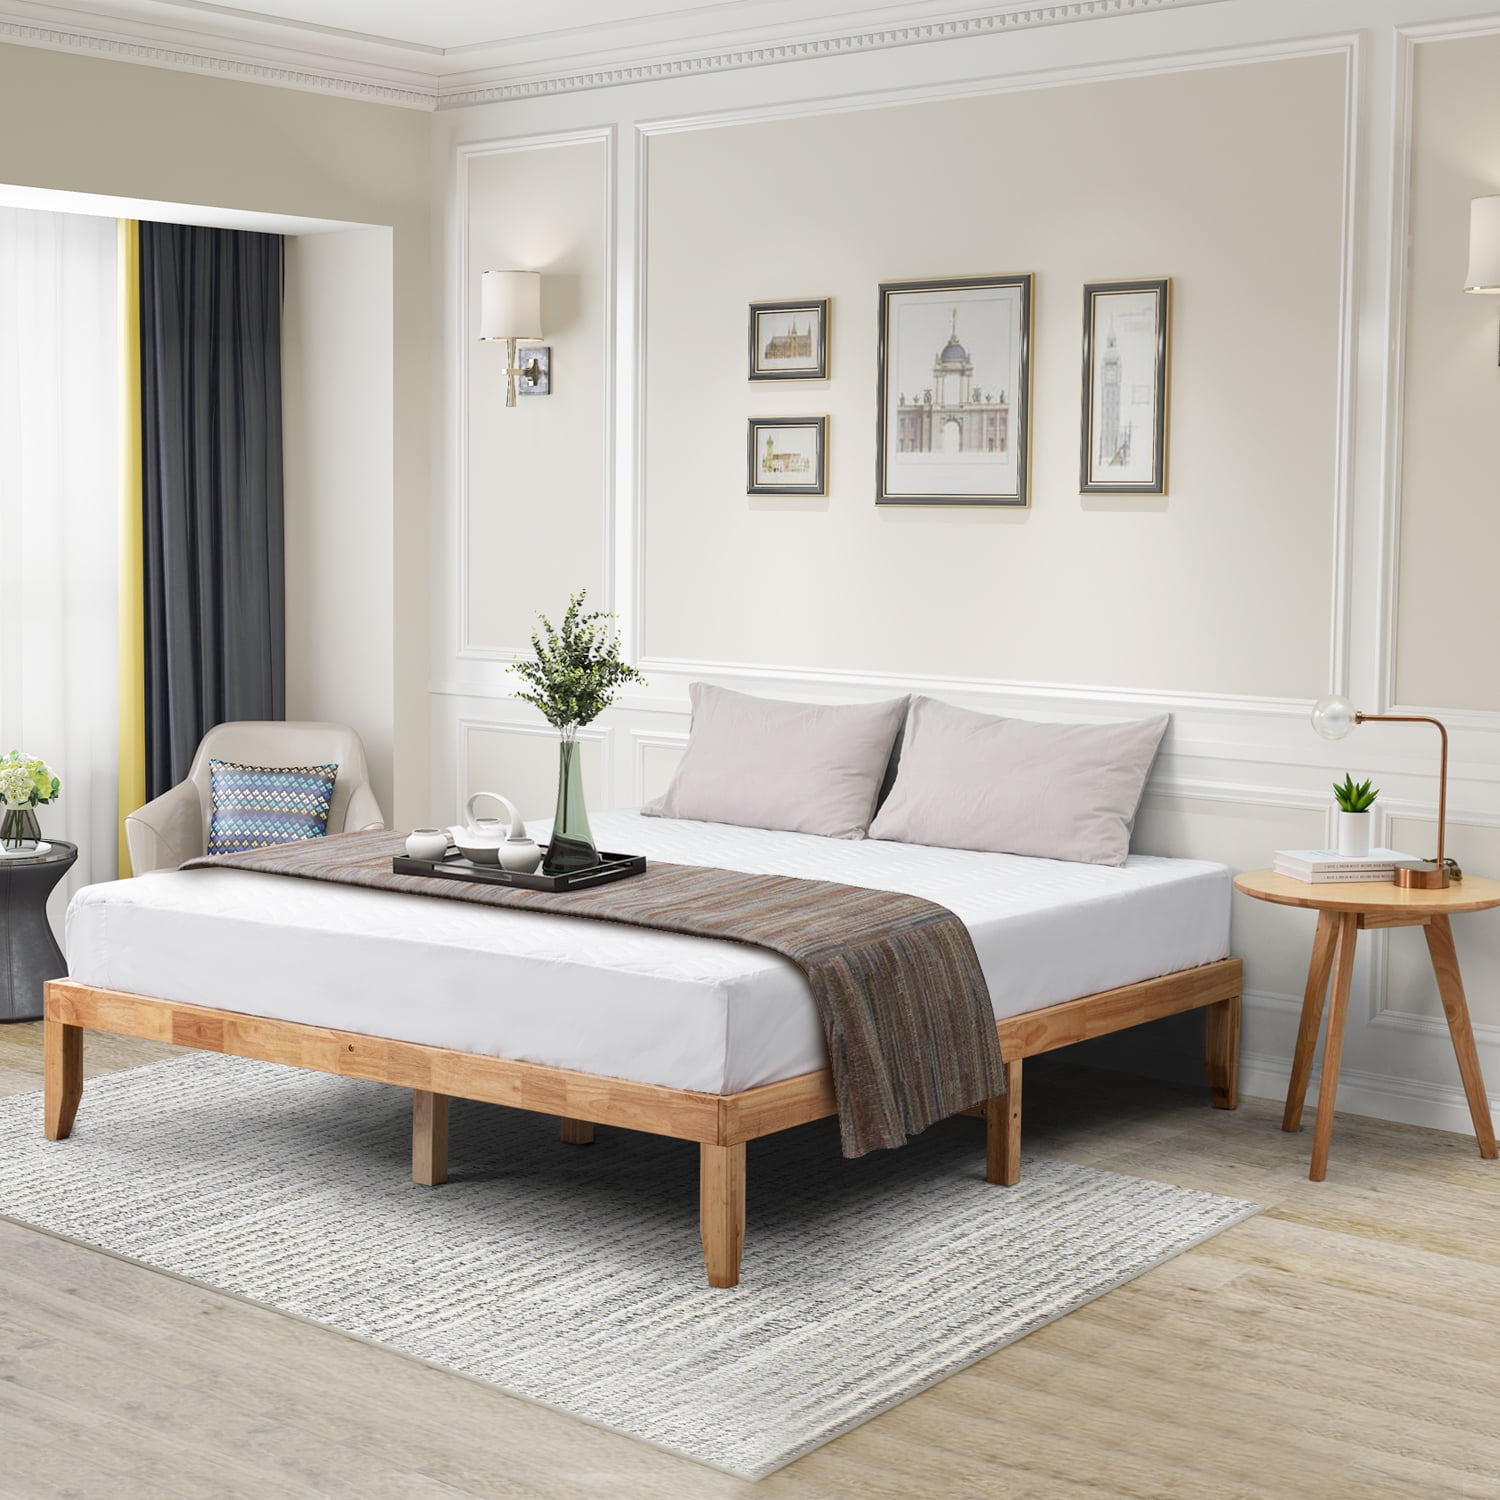 Bed Frame With Natural Wooden Slats, King Bed Frame No Headboard